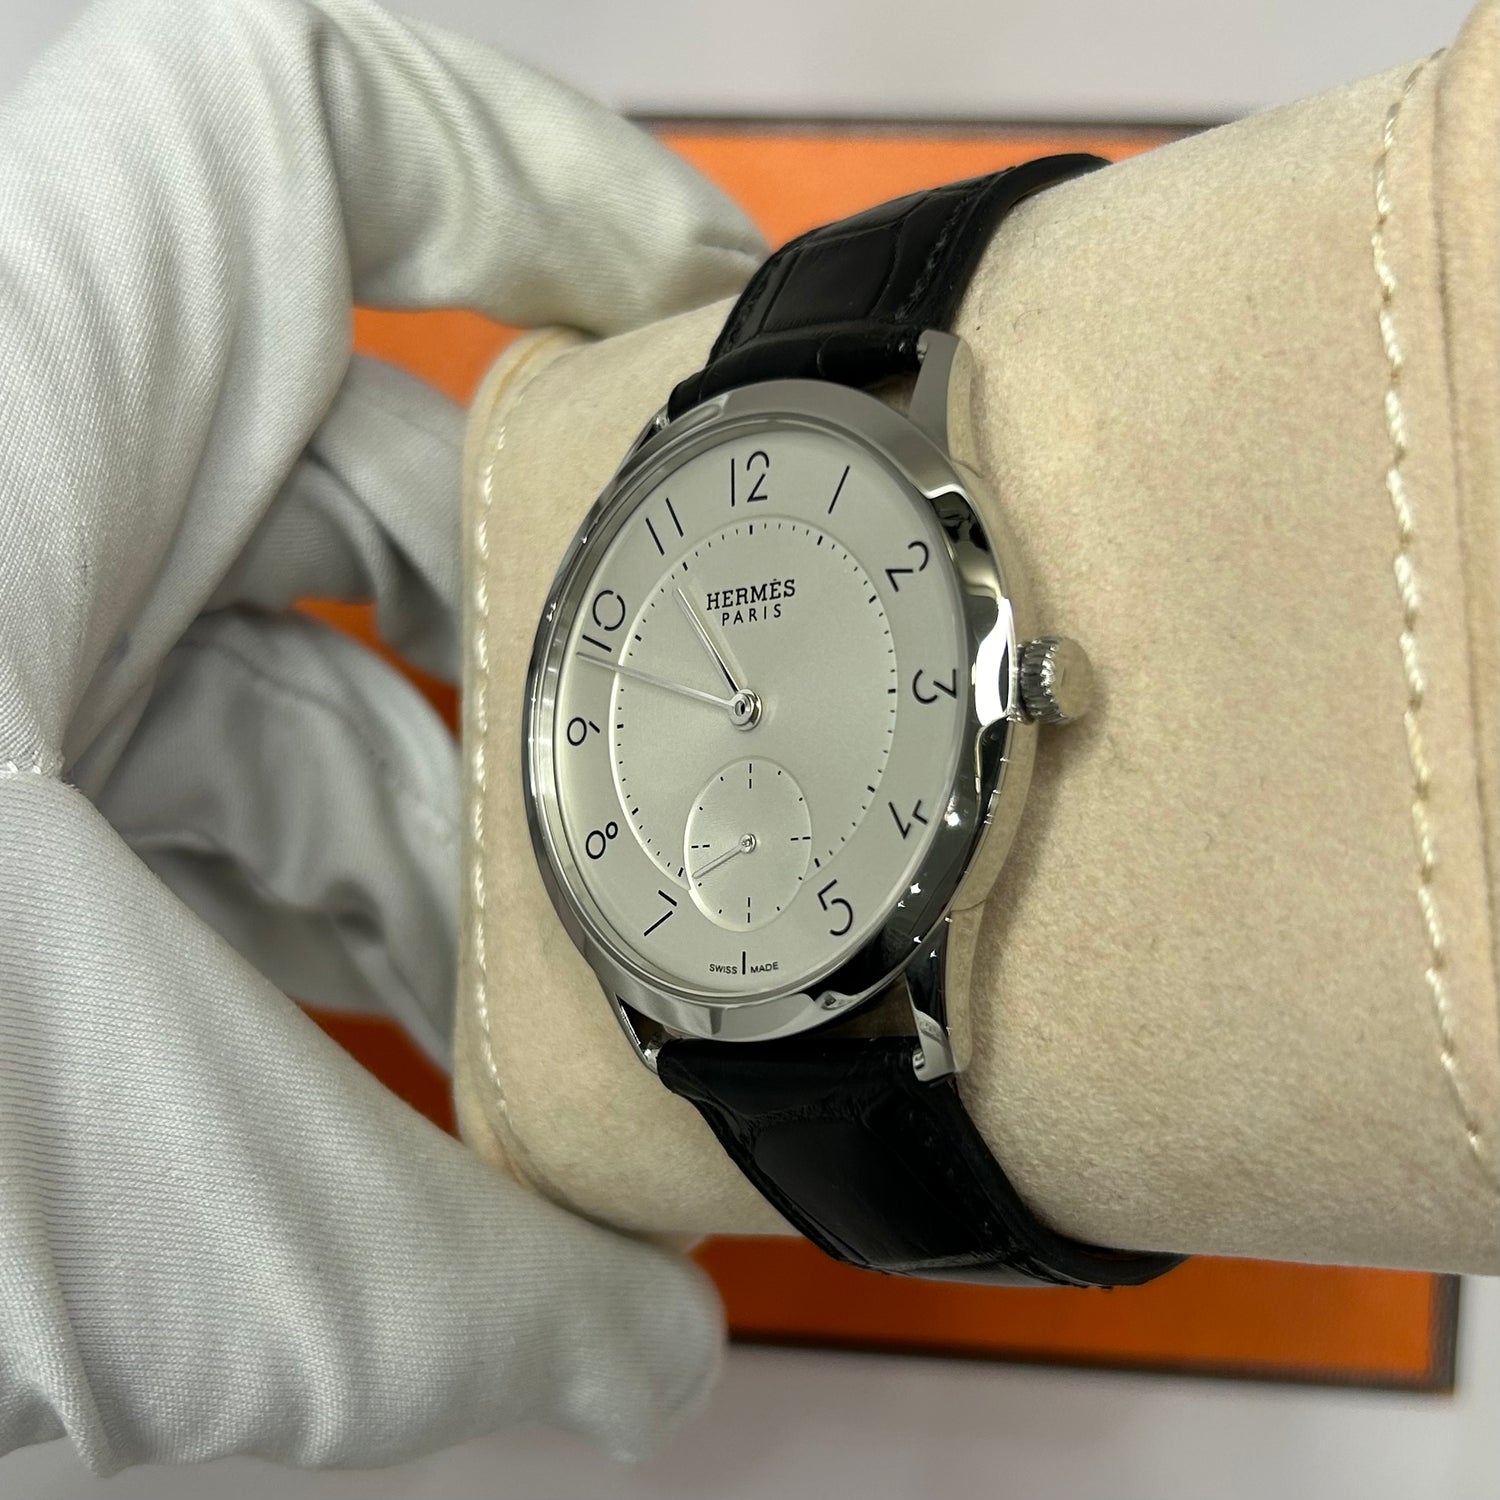 Hermès - Slim watch